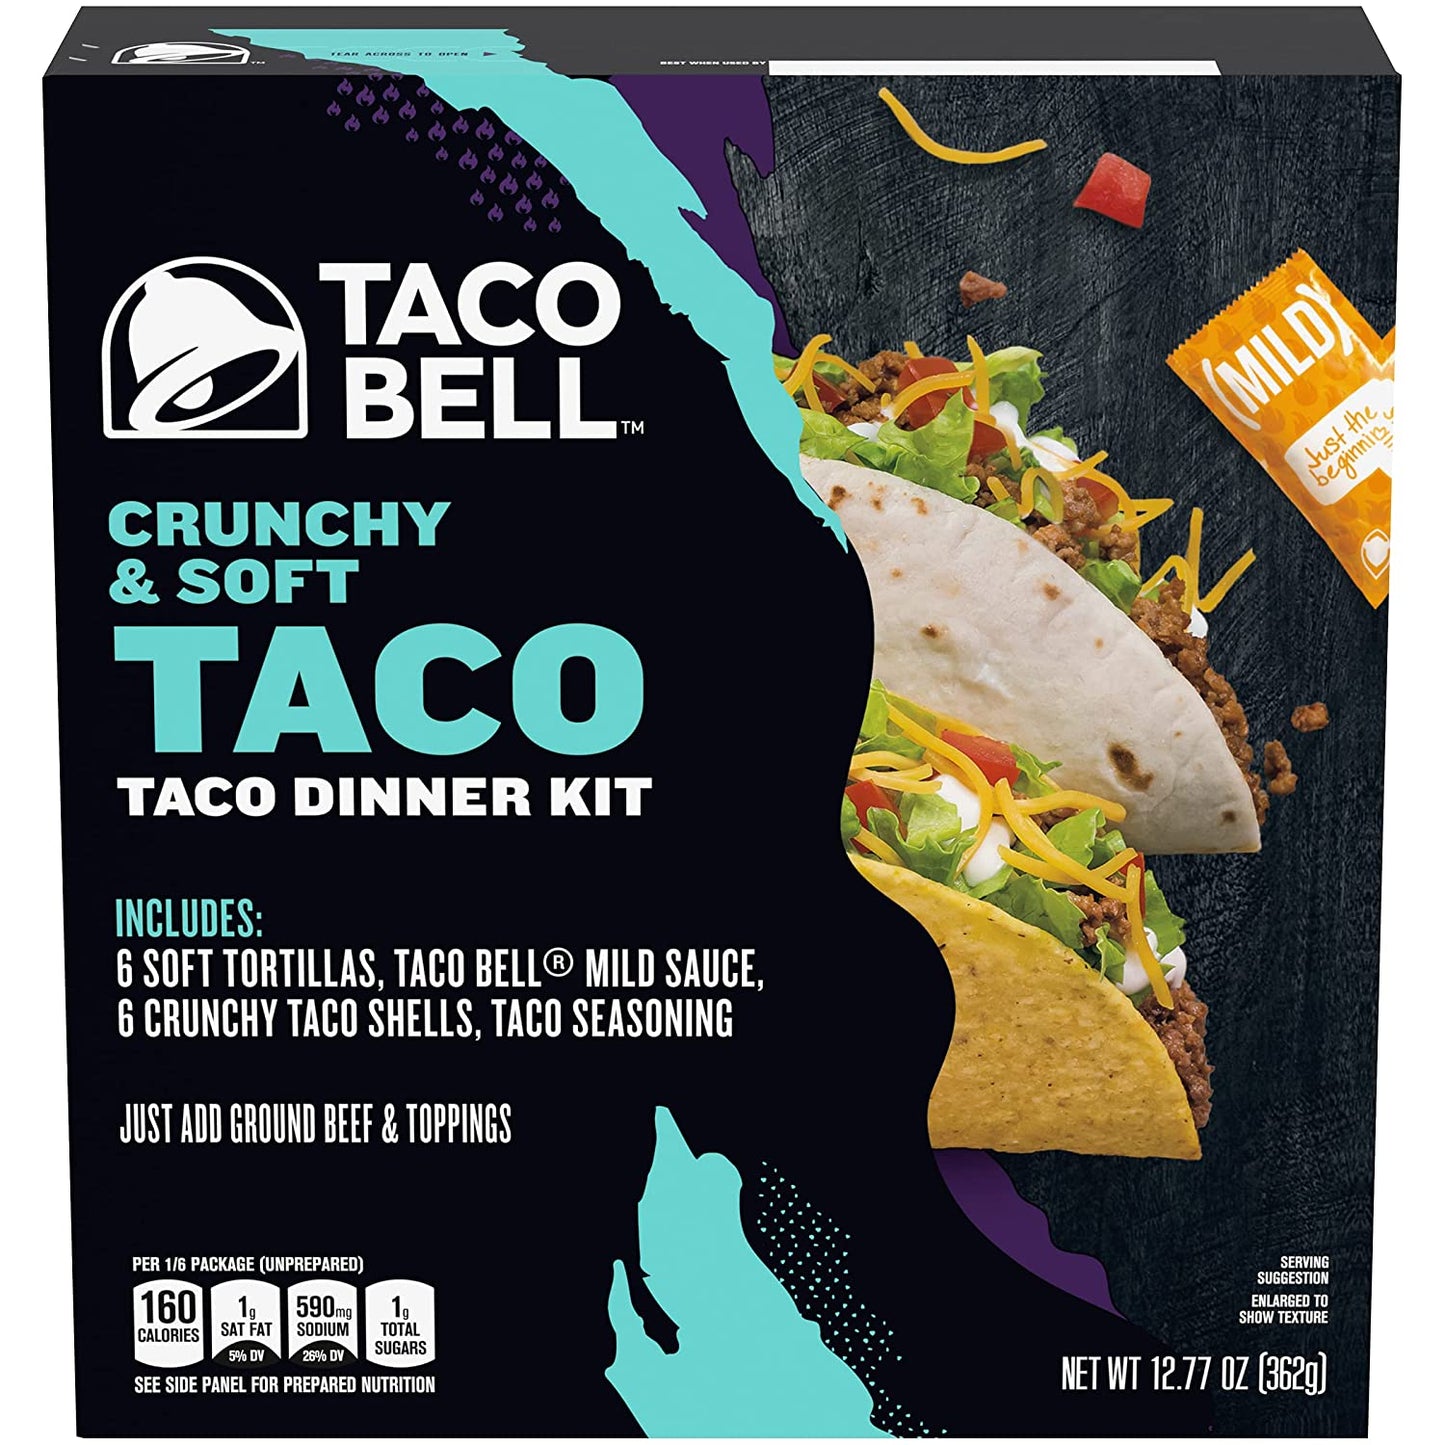 Taco Bell Crunchy & Soft Taco Dinner Kit, 12.77 oz Box (Pack of 10)